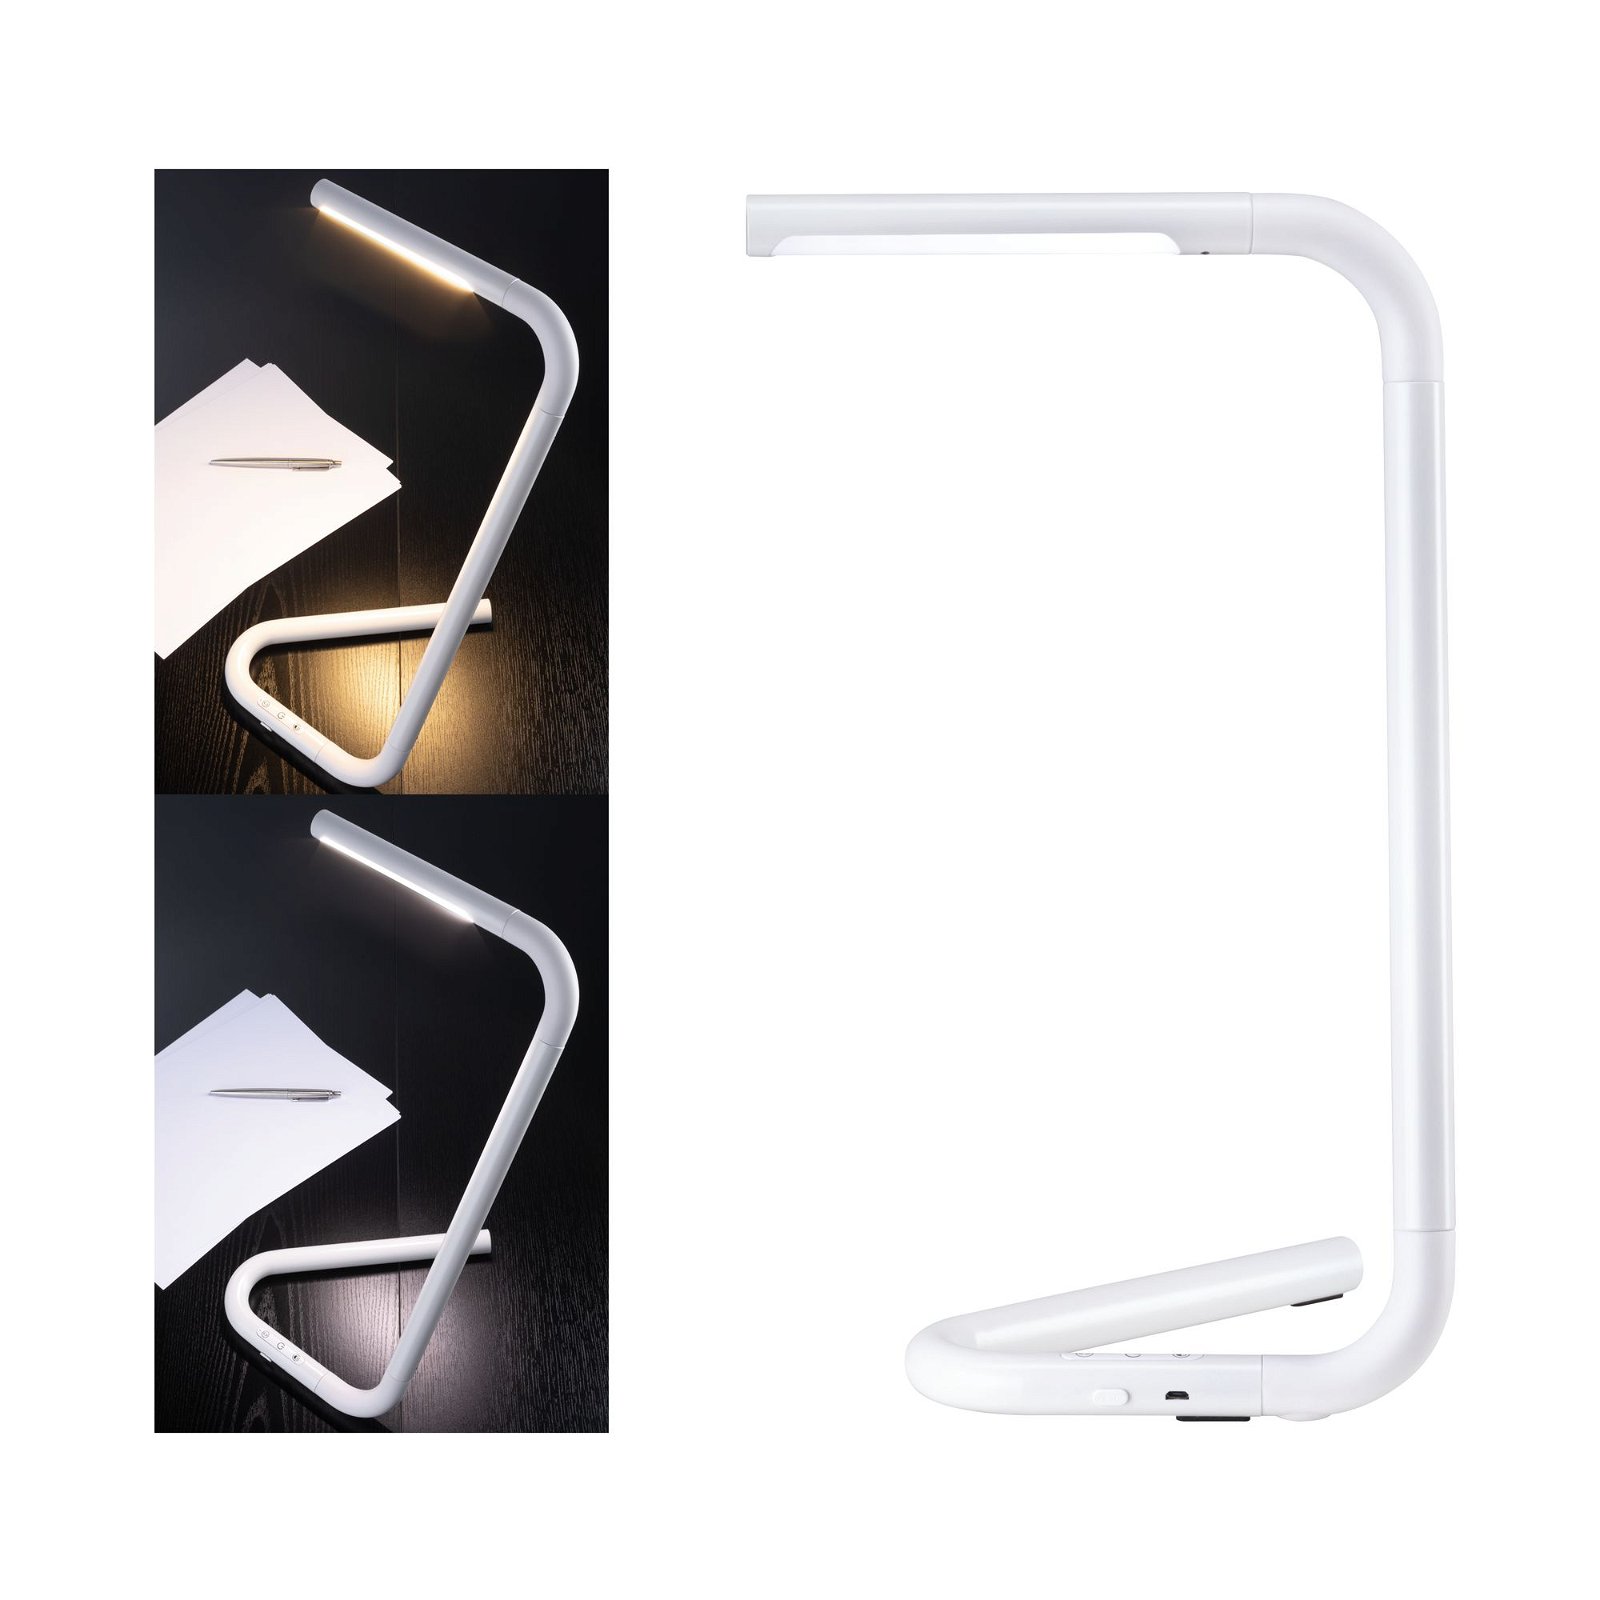 LED Desk luminaire FlexLink Tunable White 370lm 4,5W White